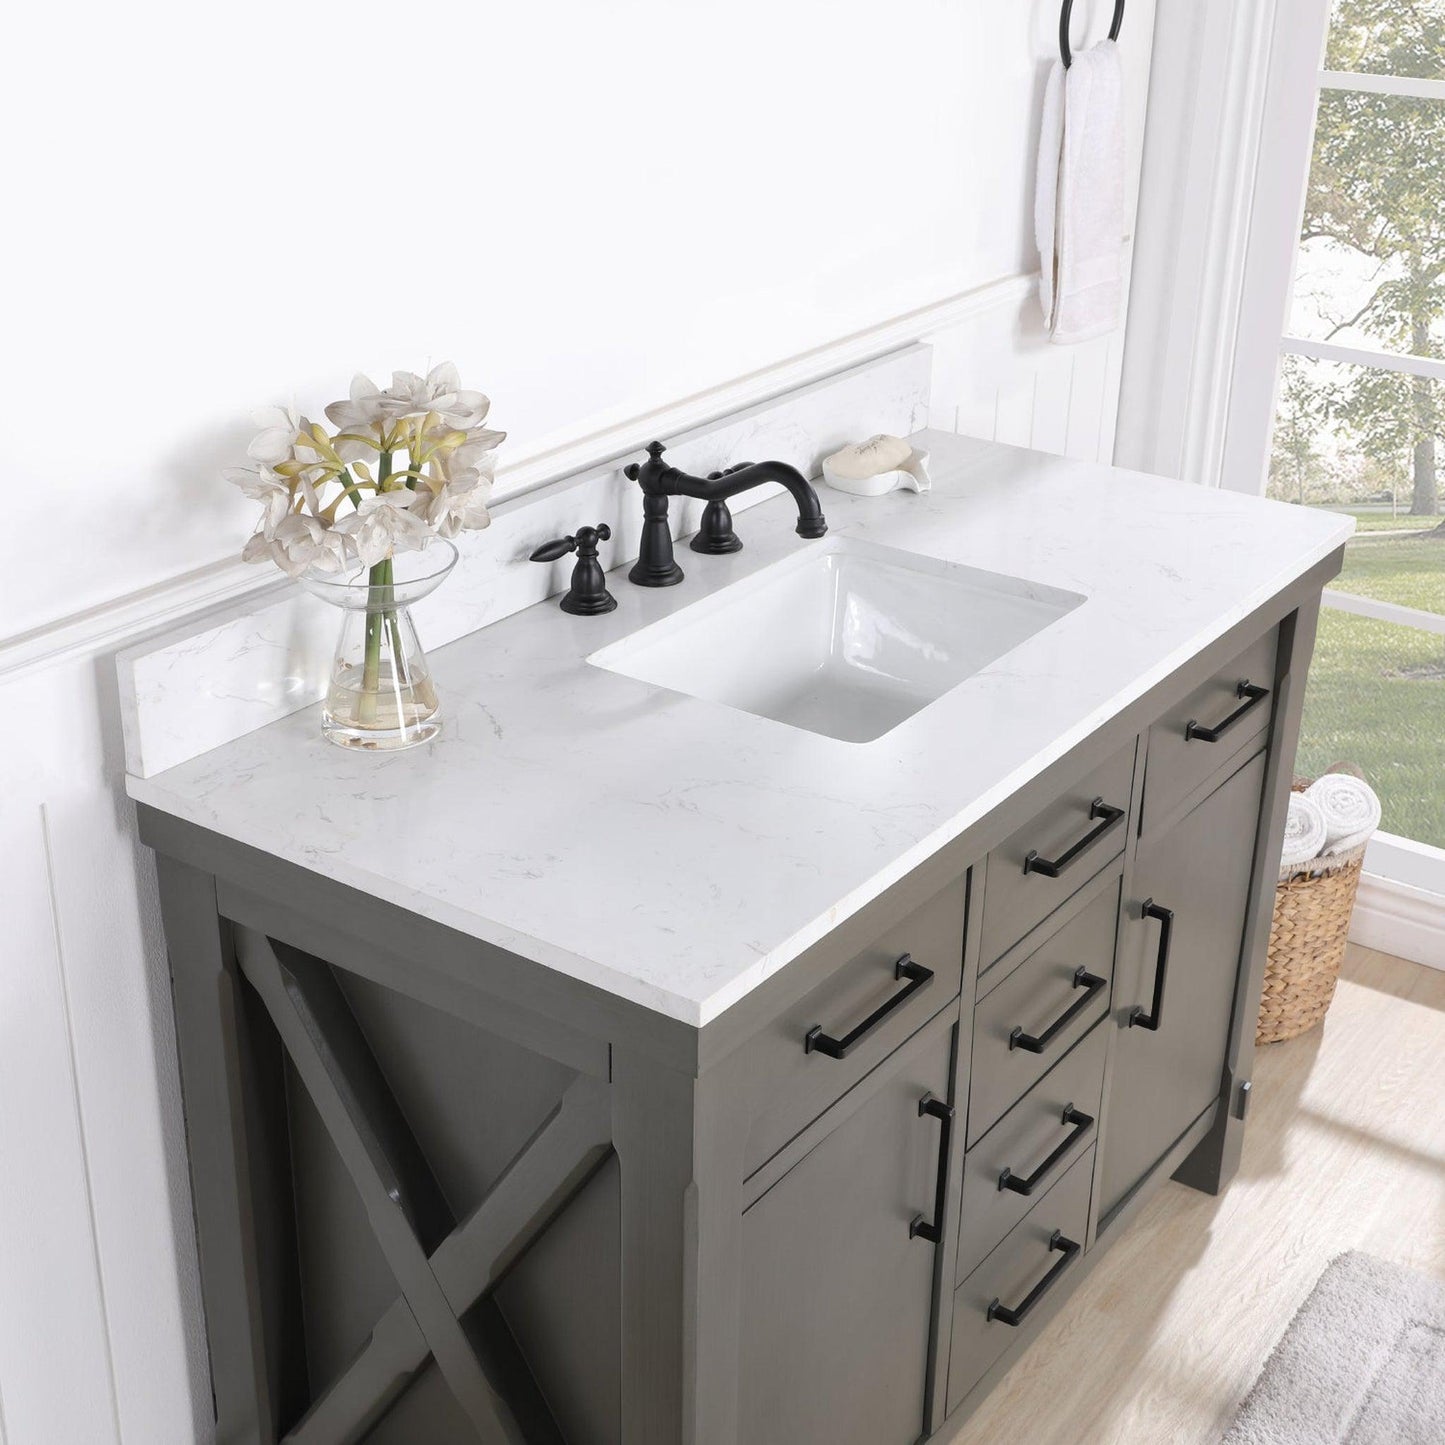 Vinnova Viella 48" Single Sink Bath Vanity In Rust Grey Finish With White Composite Countertop